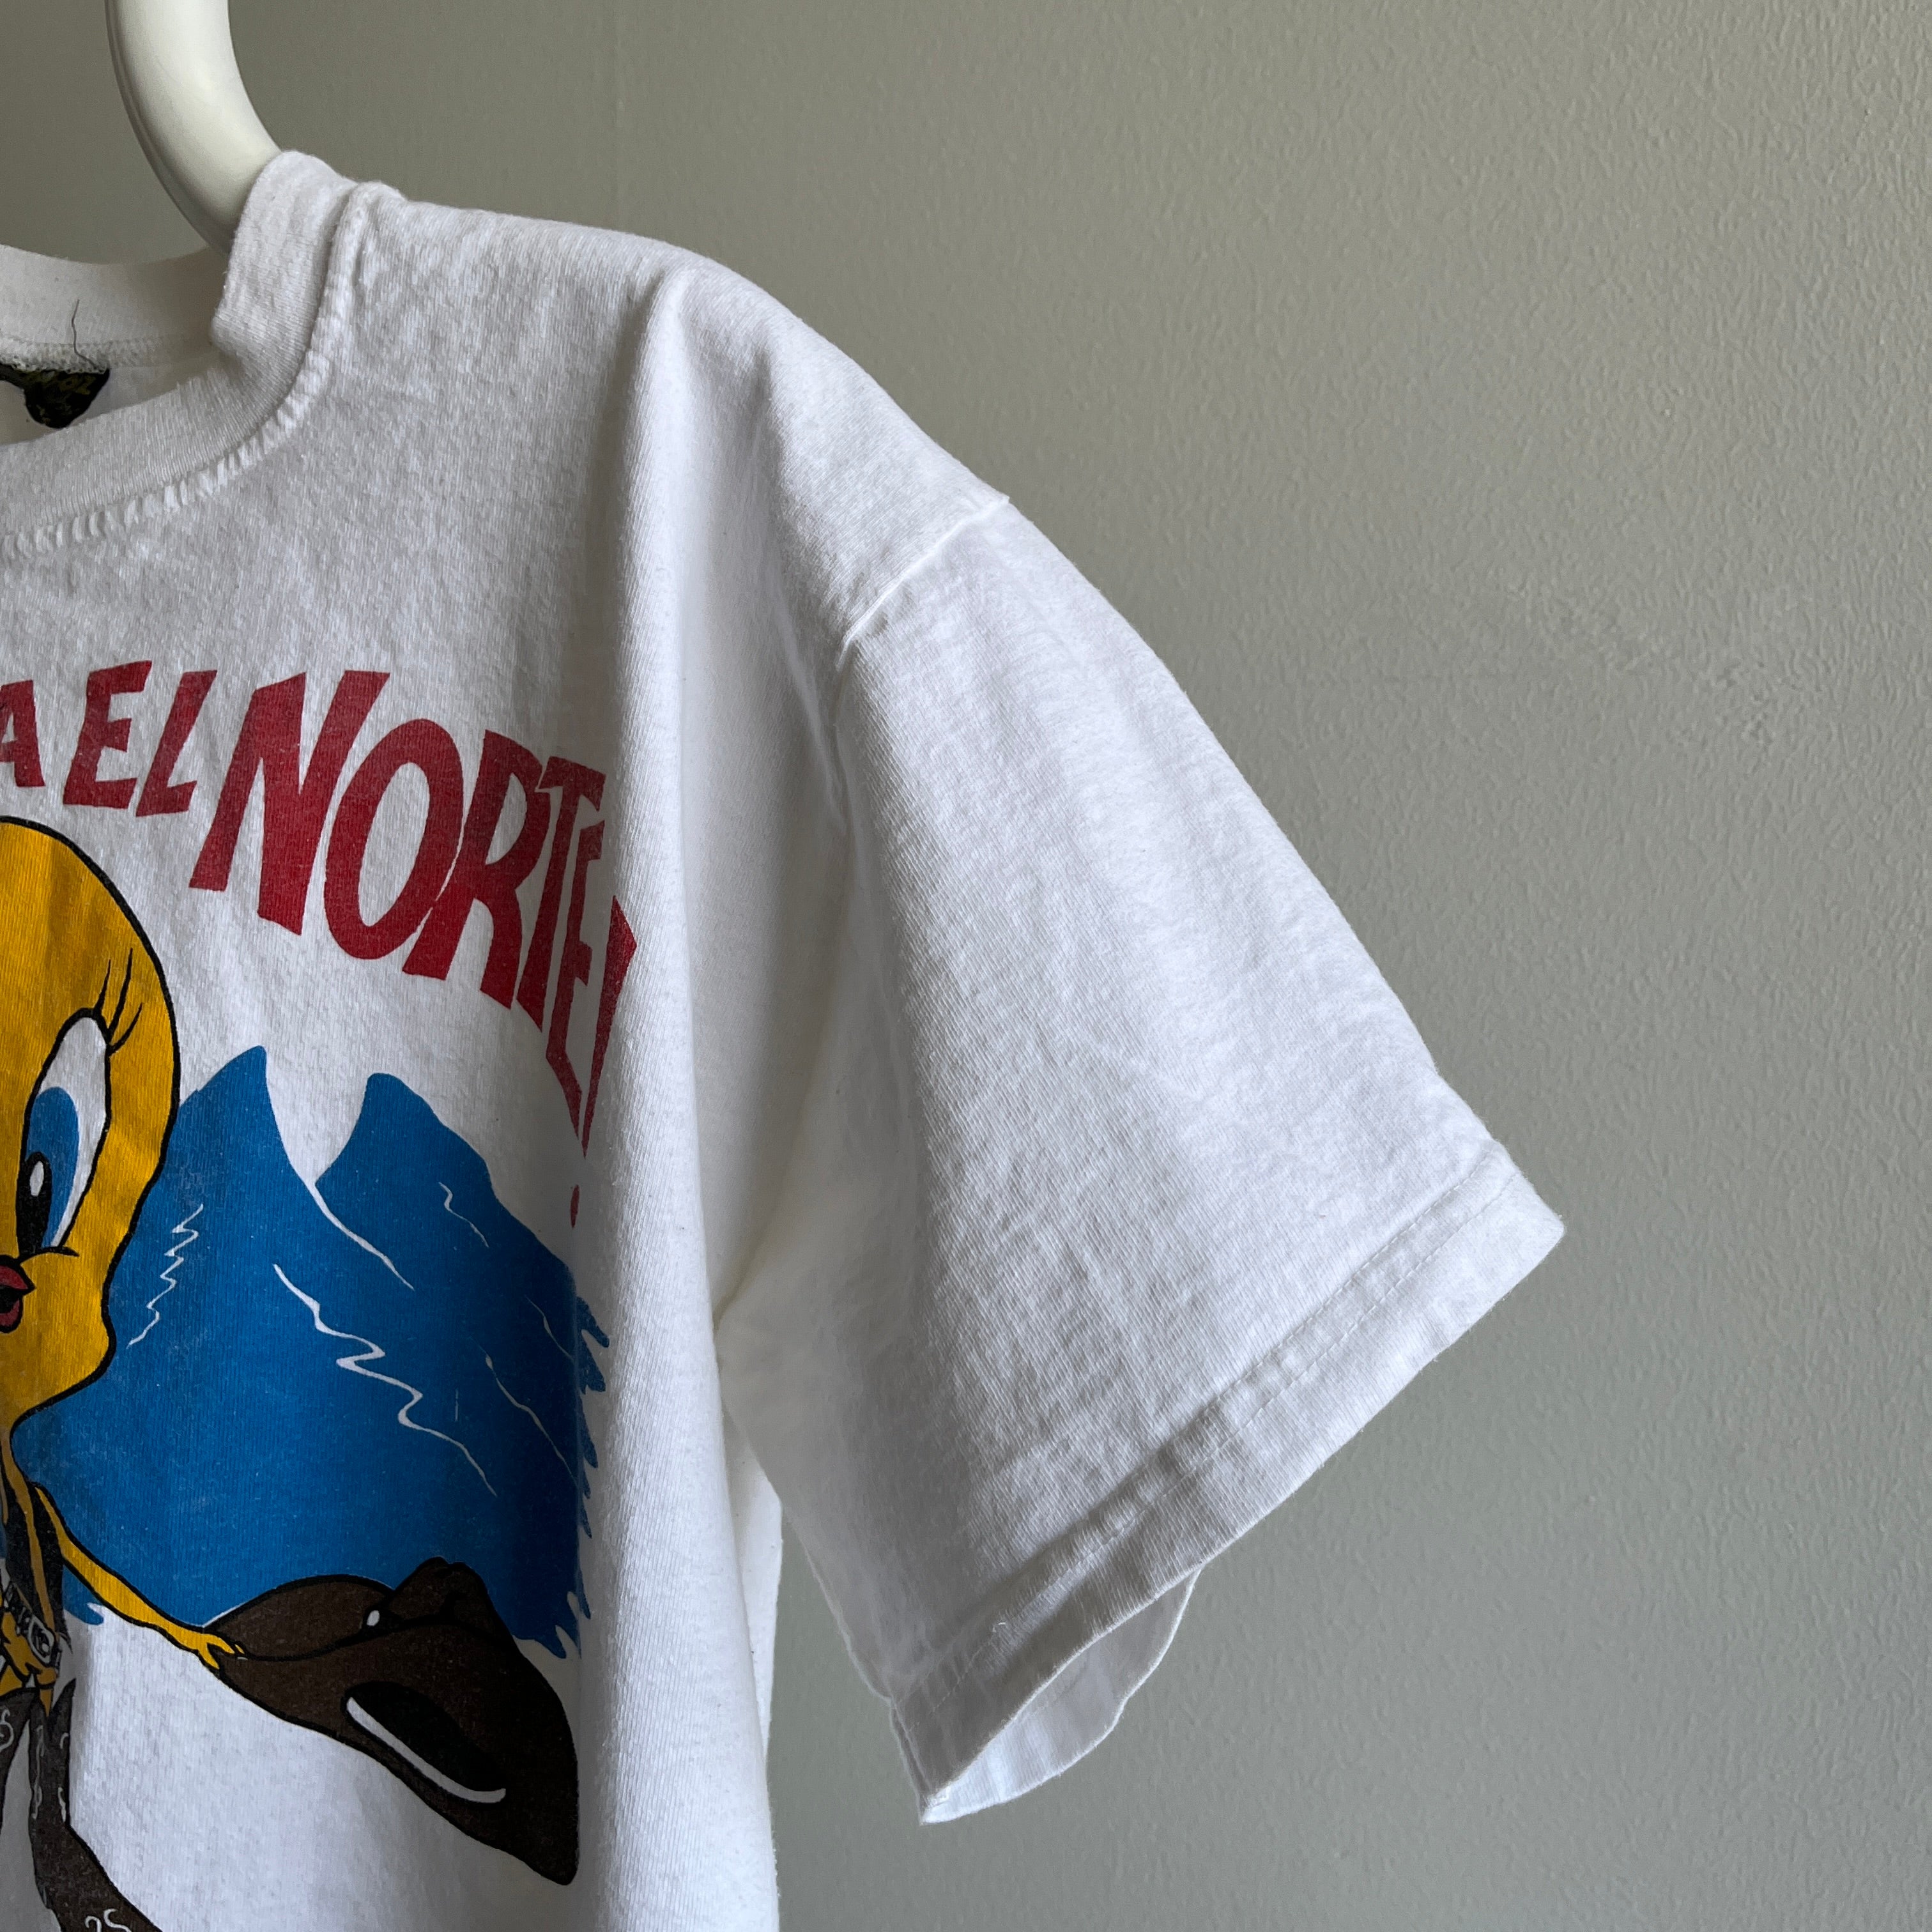 1980s Tweety Bird Tourist T-Shirt - Monterey, Mexico